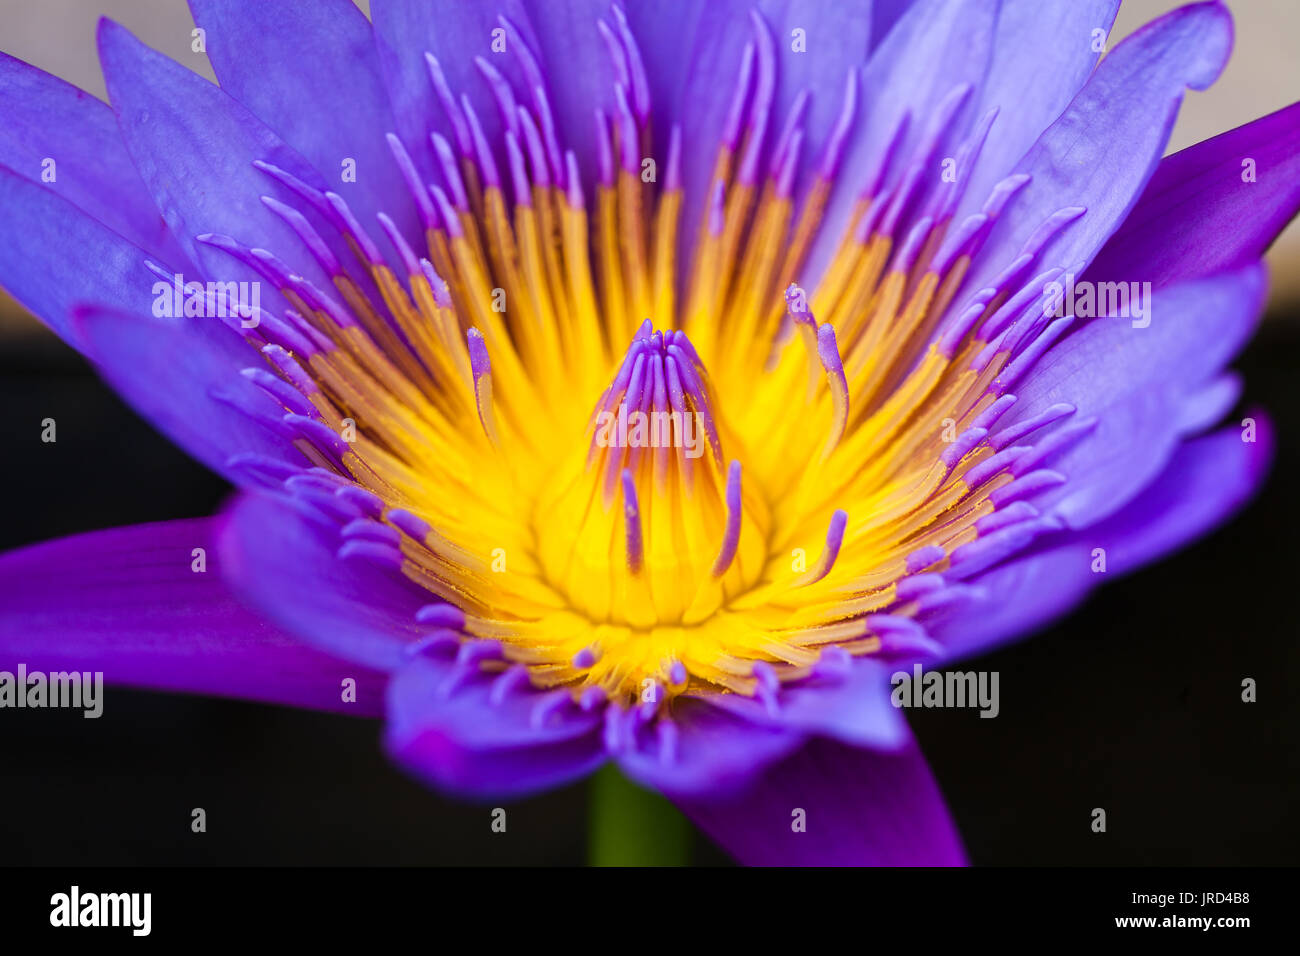 Tropical flower purple yellow close-up macro photo Stock Photo